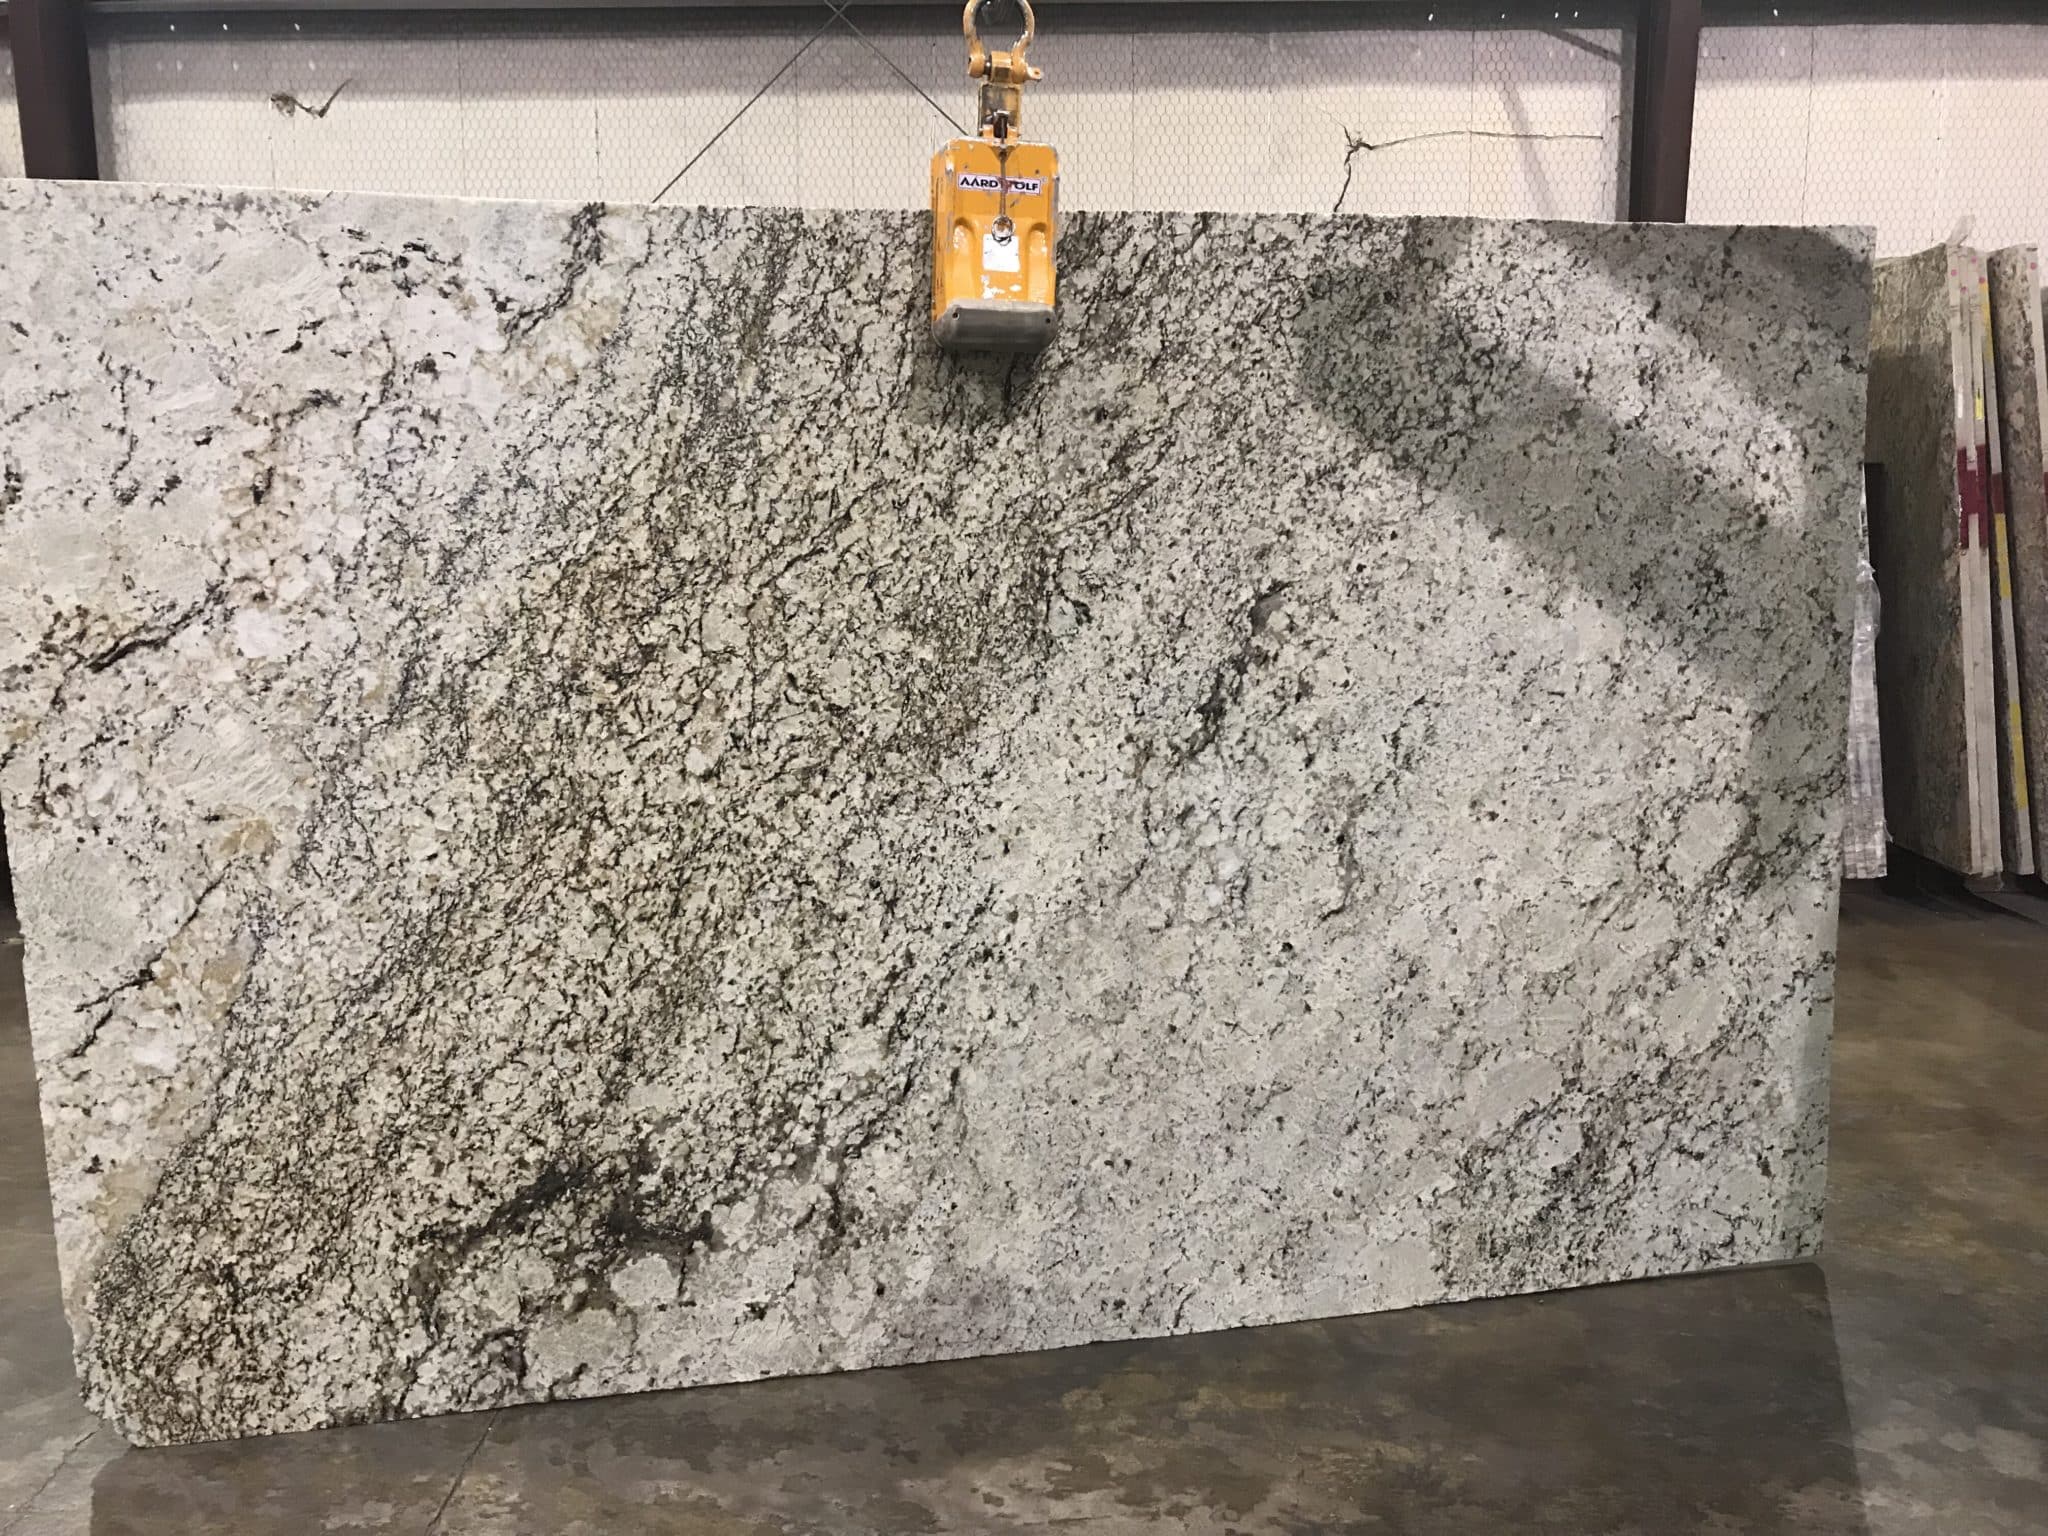 Slab of granite used to make countertops